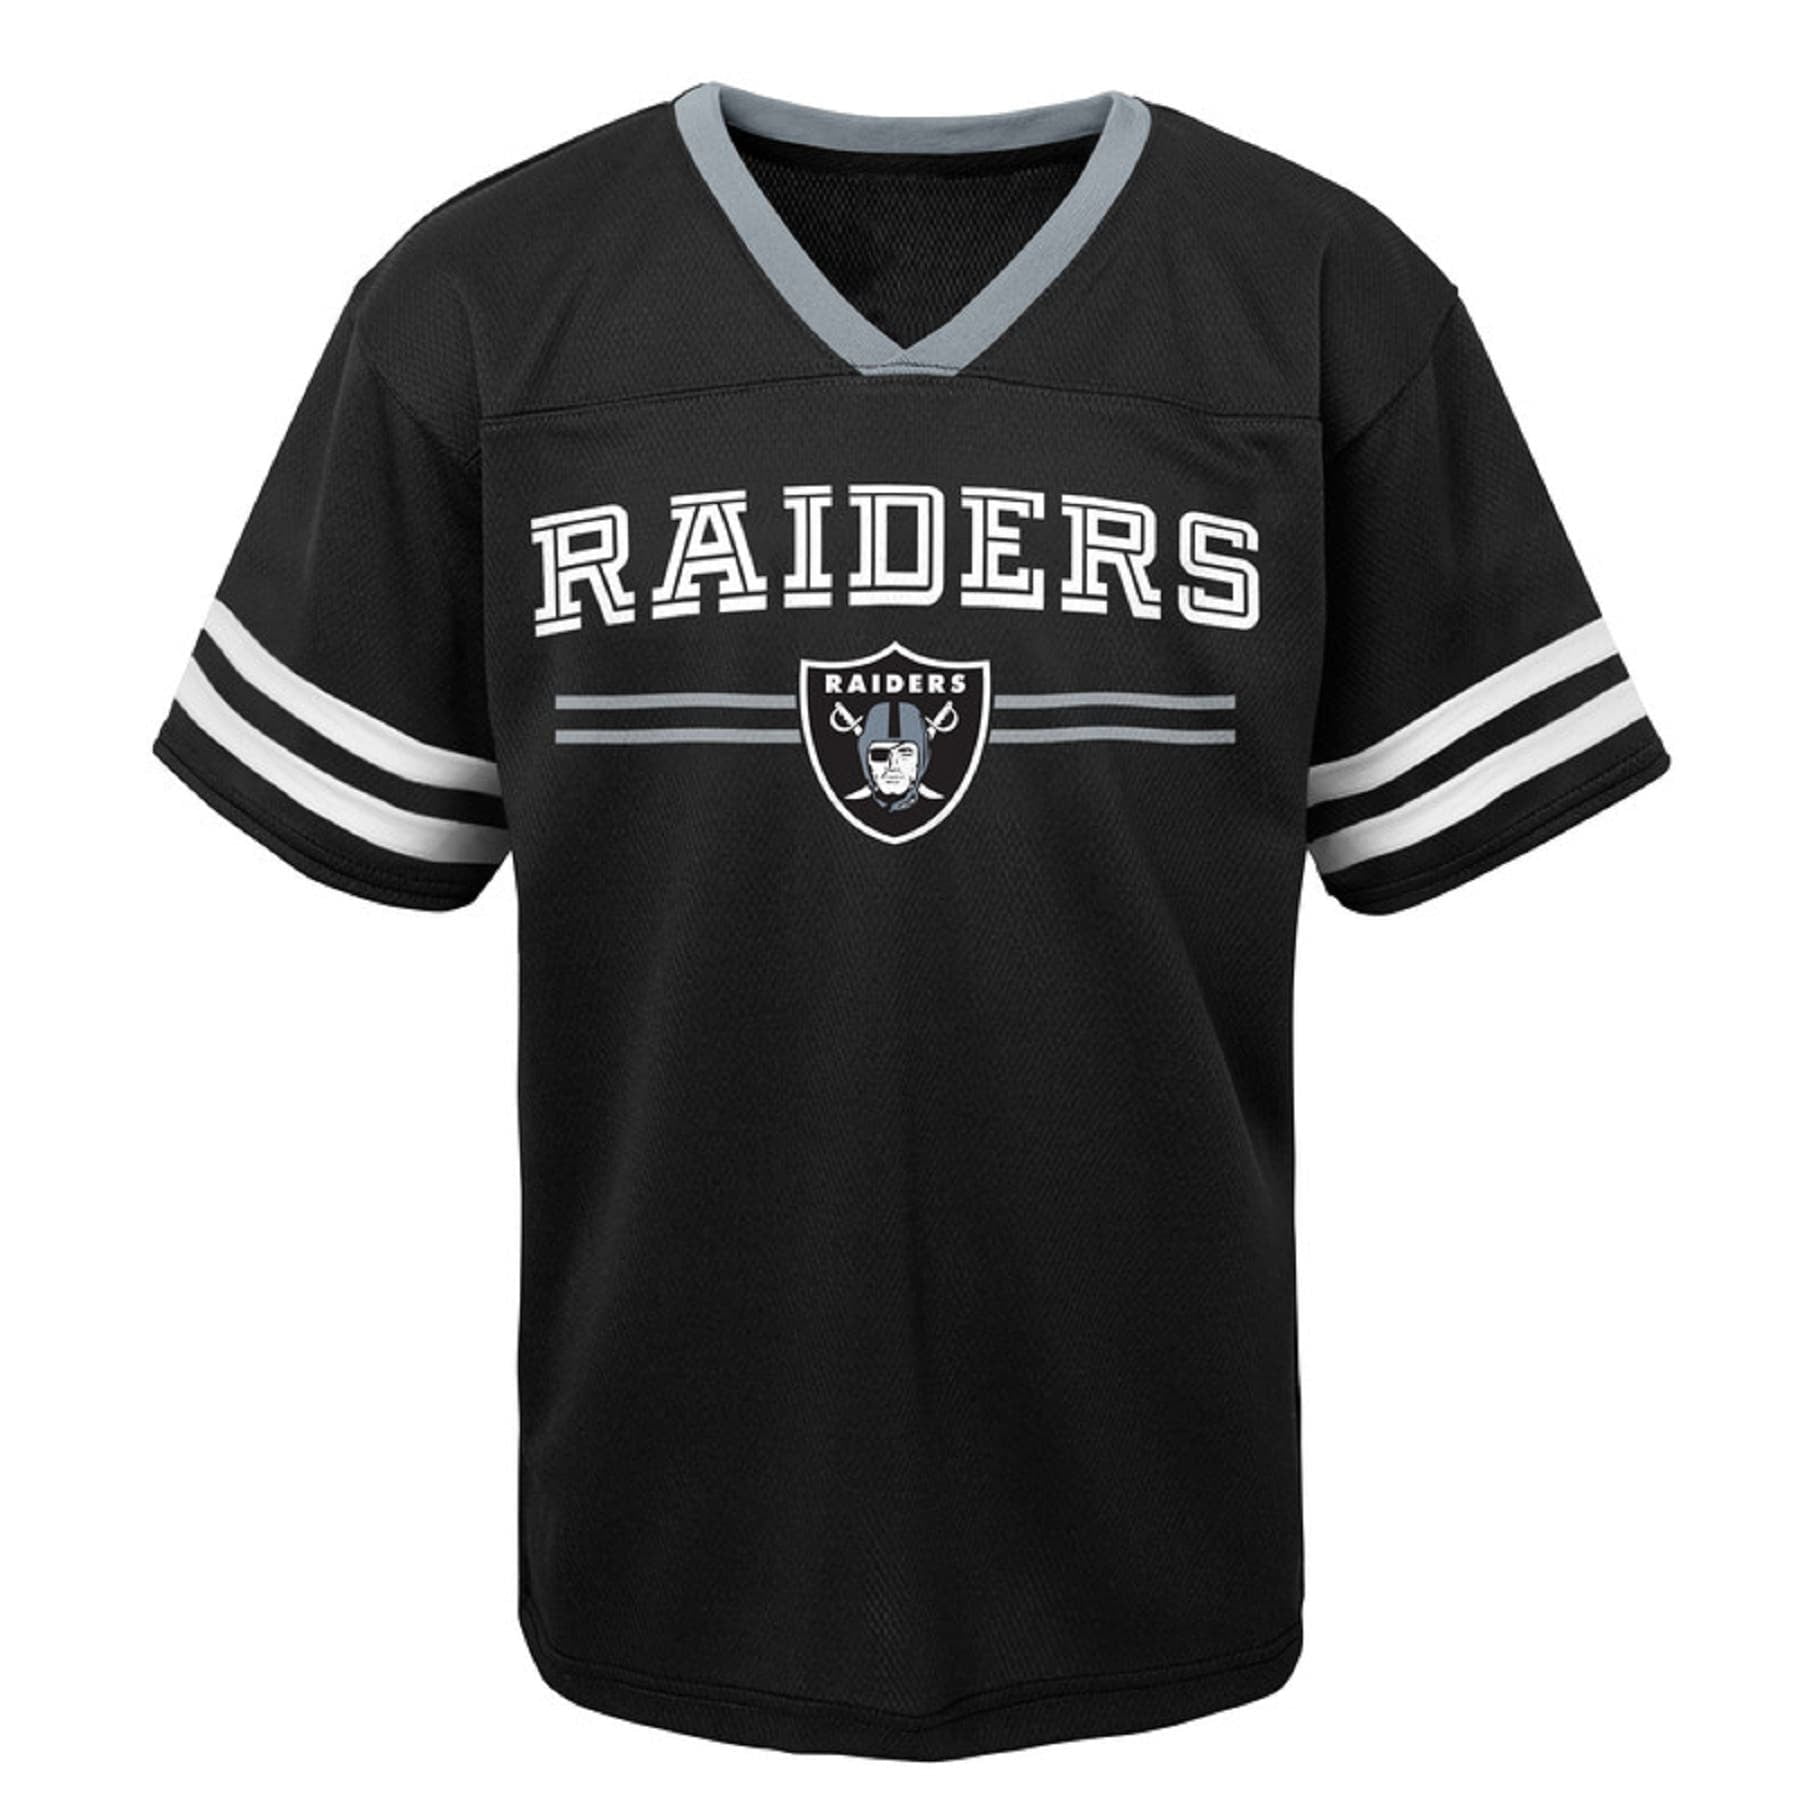 5t raiders jersey